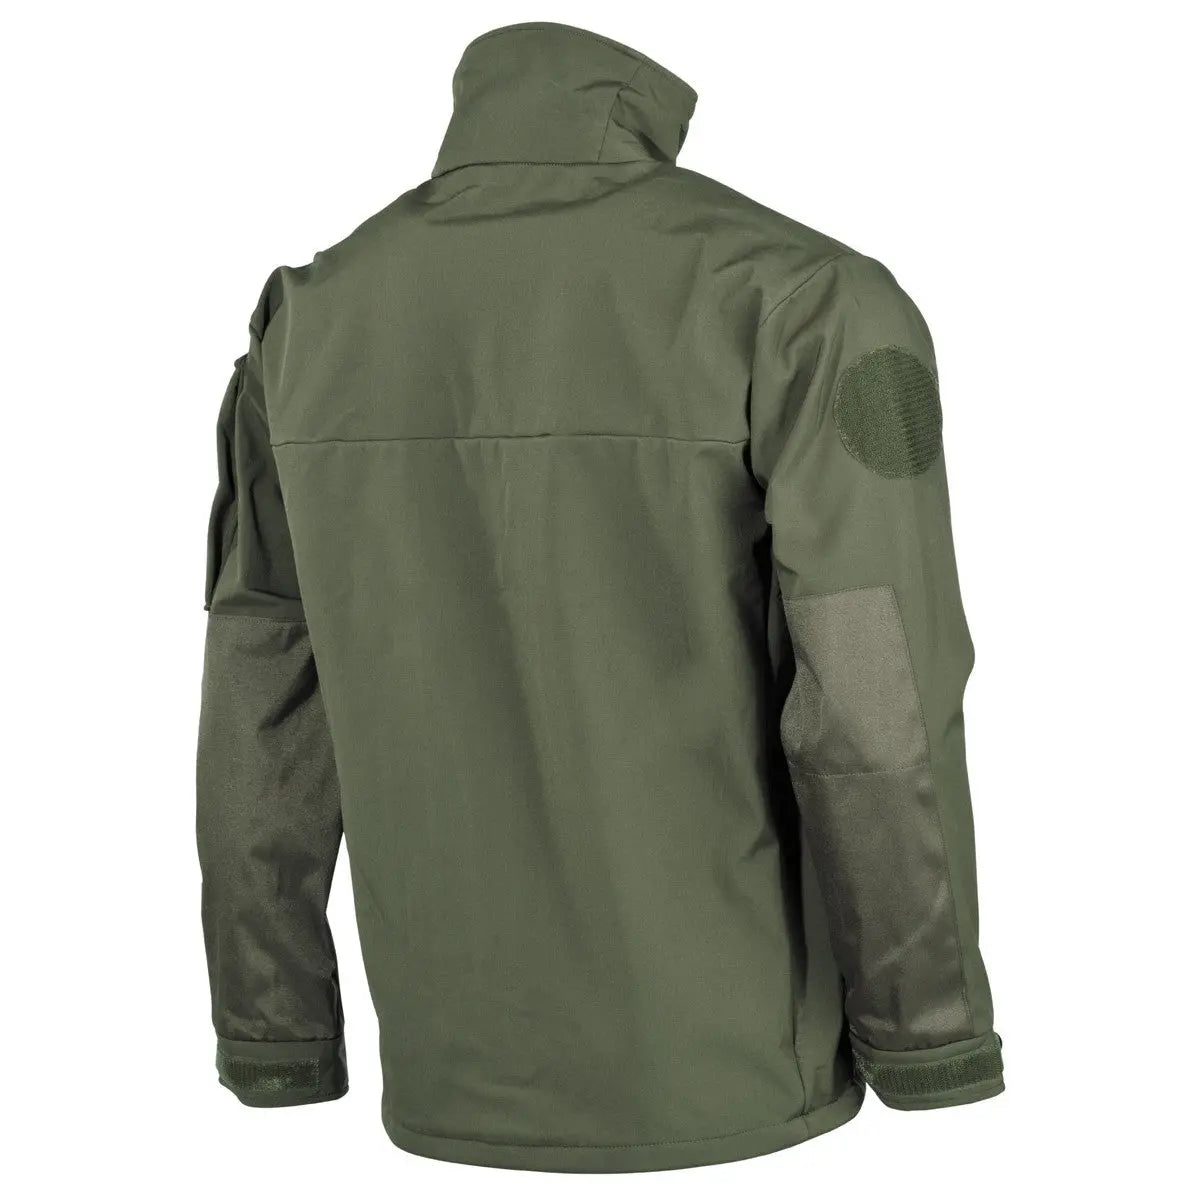 Soft Shell Jacket, "Australia", olive NSO Gear